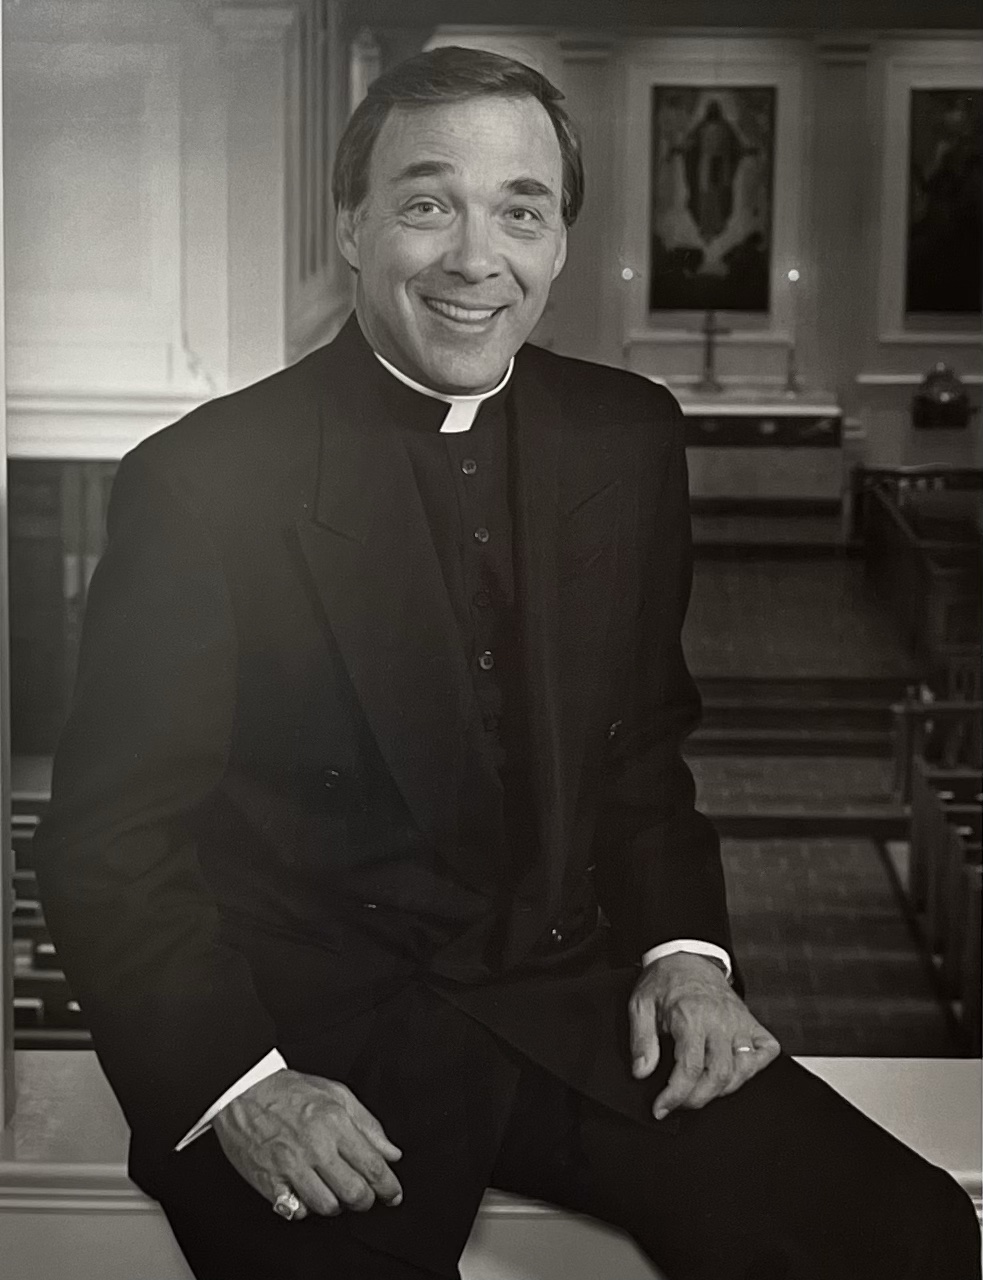 The Rev. David L. Ritterpusch